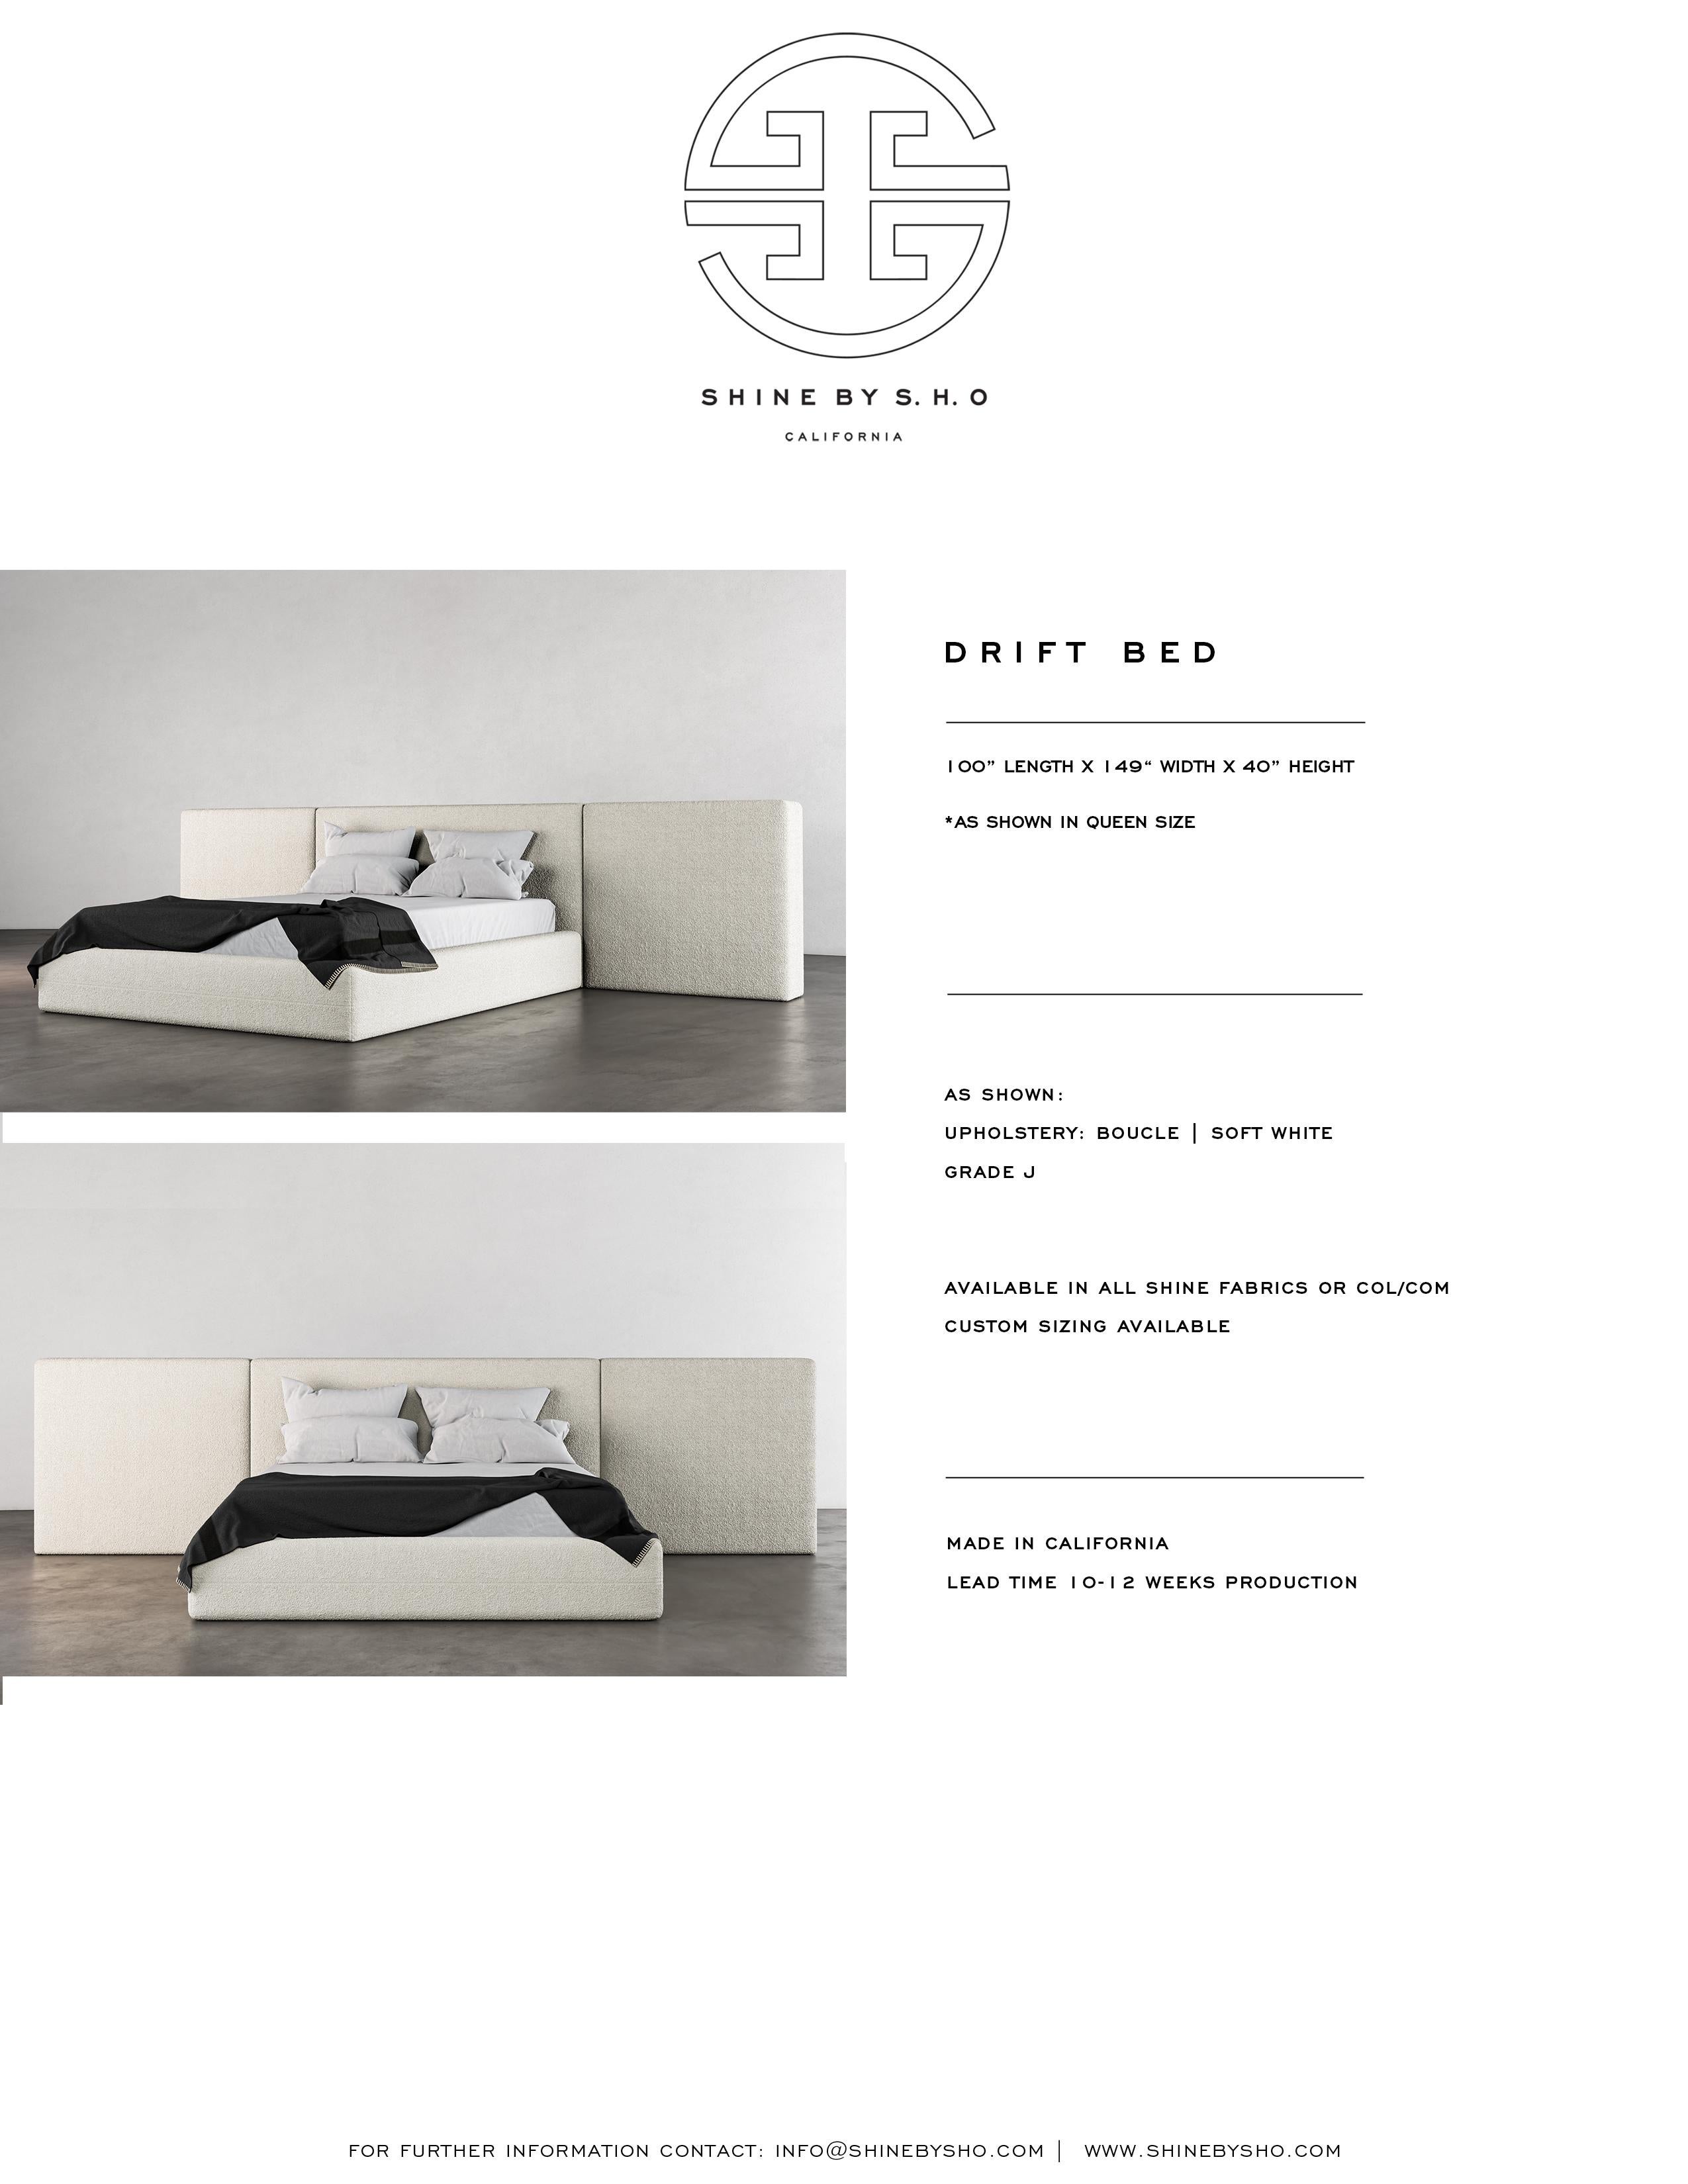 Upholstery Drift Bed - Modern Design in Soft White Boucle For Sale